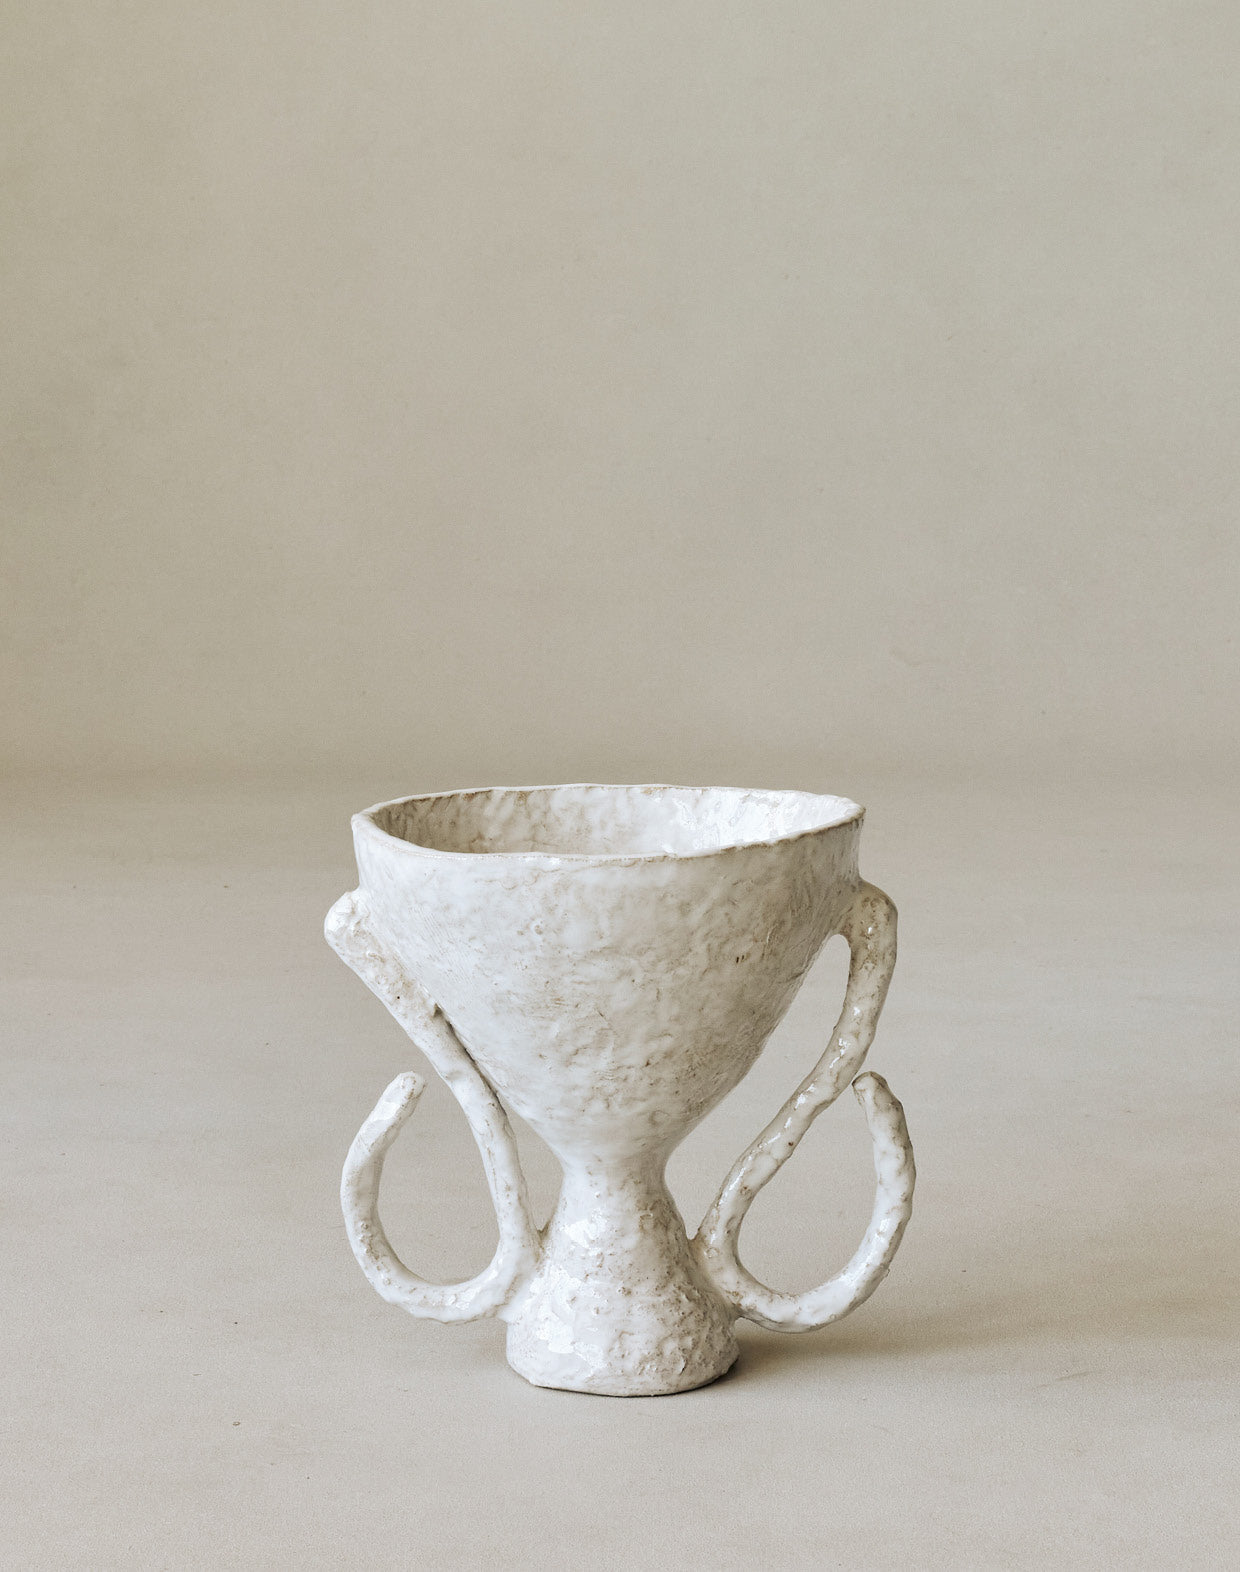 Maggie Wells, Ceramic Sculpture with Majolica Glaze No. 05